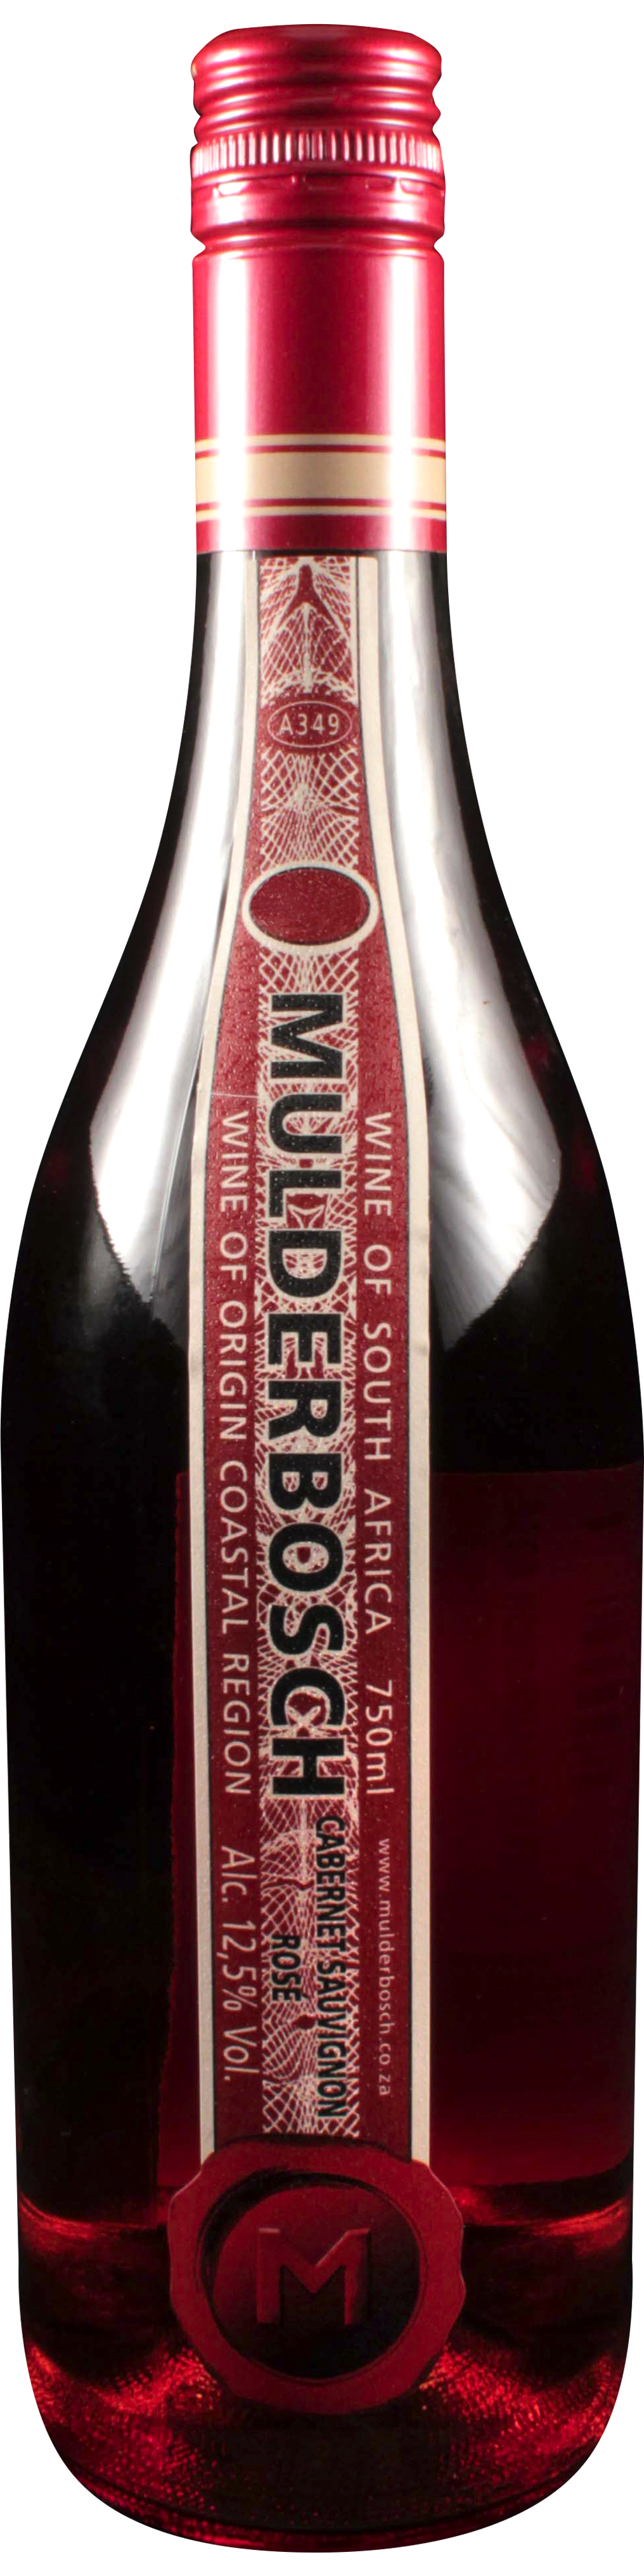 Bottle shot of 2011 Cabernet Sauvignon Rose